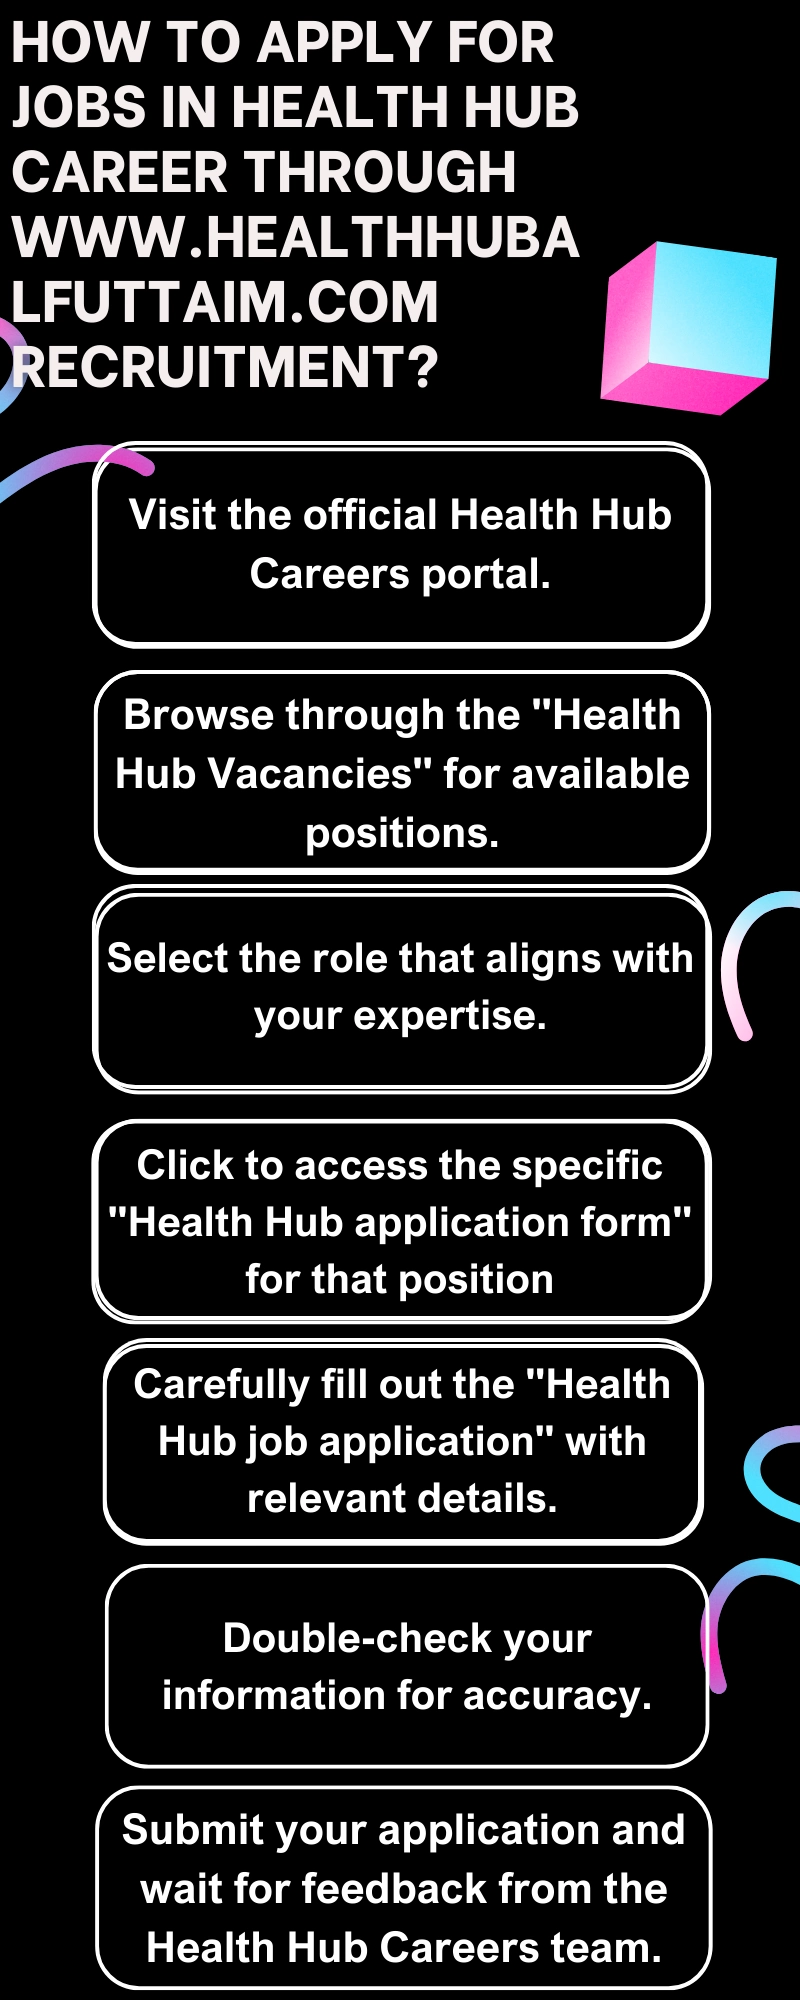 How to Apply for Jobs in Health Hub Career through www.healthhubalfuttaim.com recruitment?